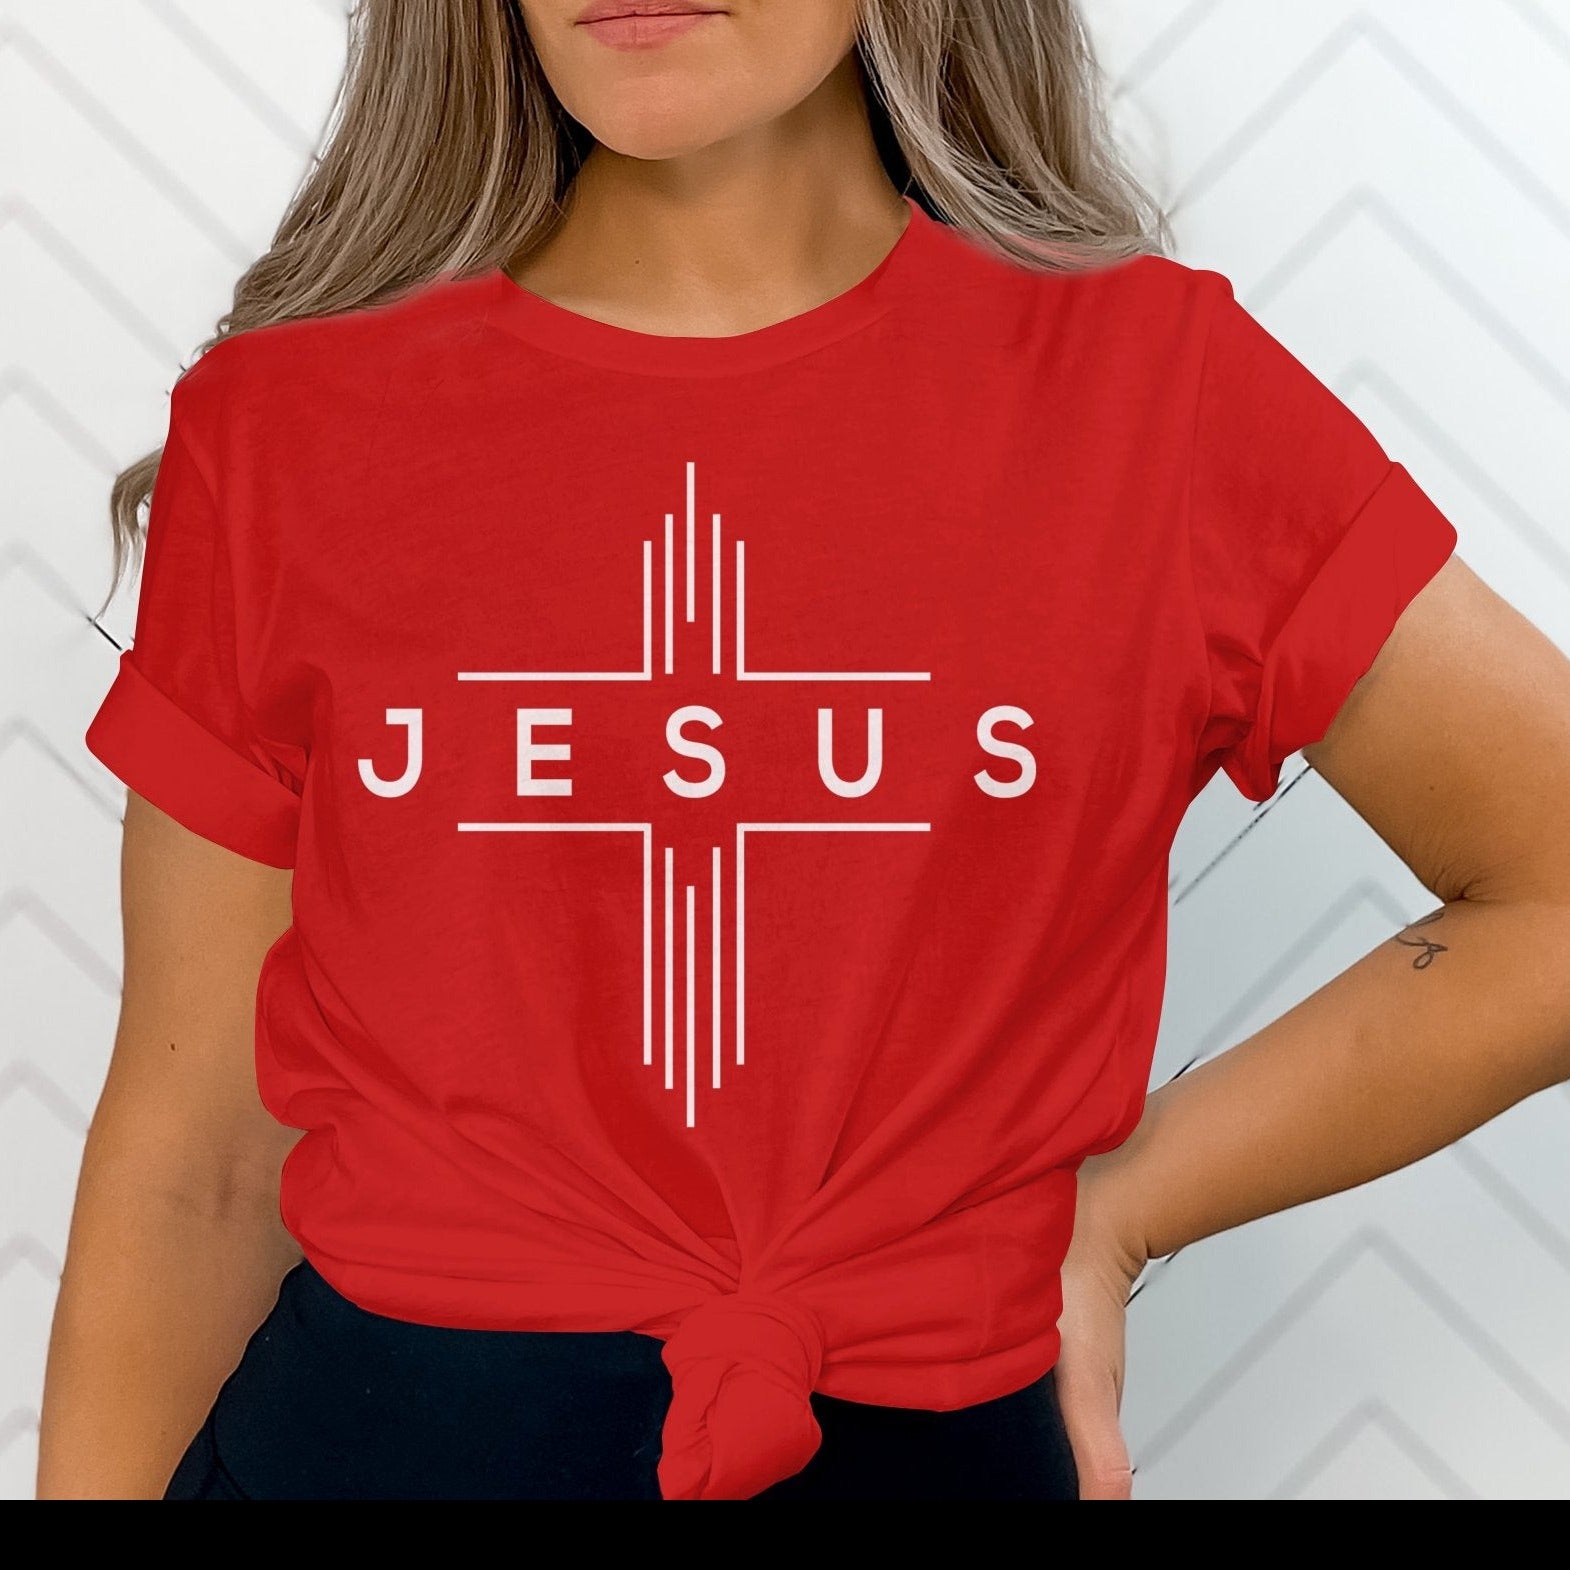 Jesus Cheveron Cross Women's Unisex Champion T-shirt - Black / Red - Matching Joggers Available Size: S Color: Black Jesus Passion Apparel